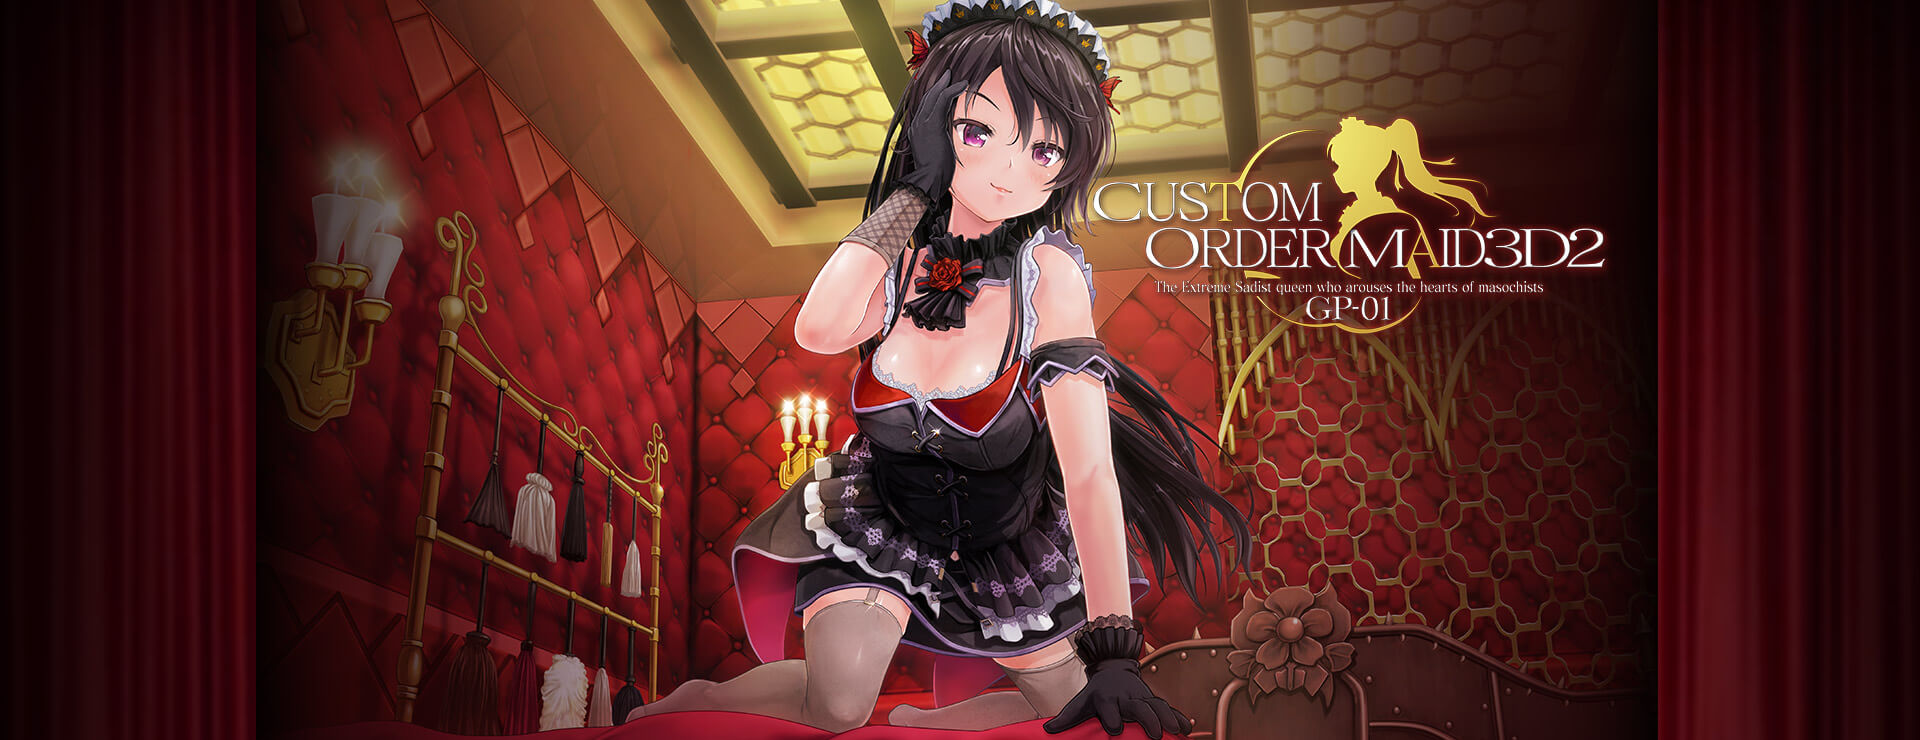 Custom Order Maid 3D2: Extreme Sadist Queen GP01 DLC - シミュレーション ゲーム